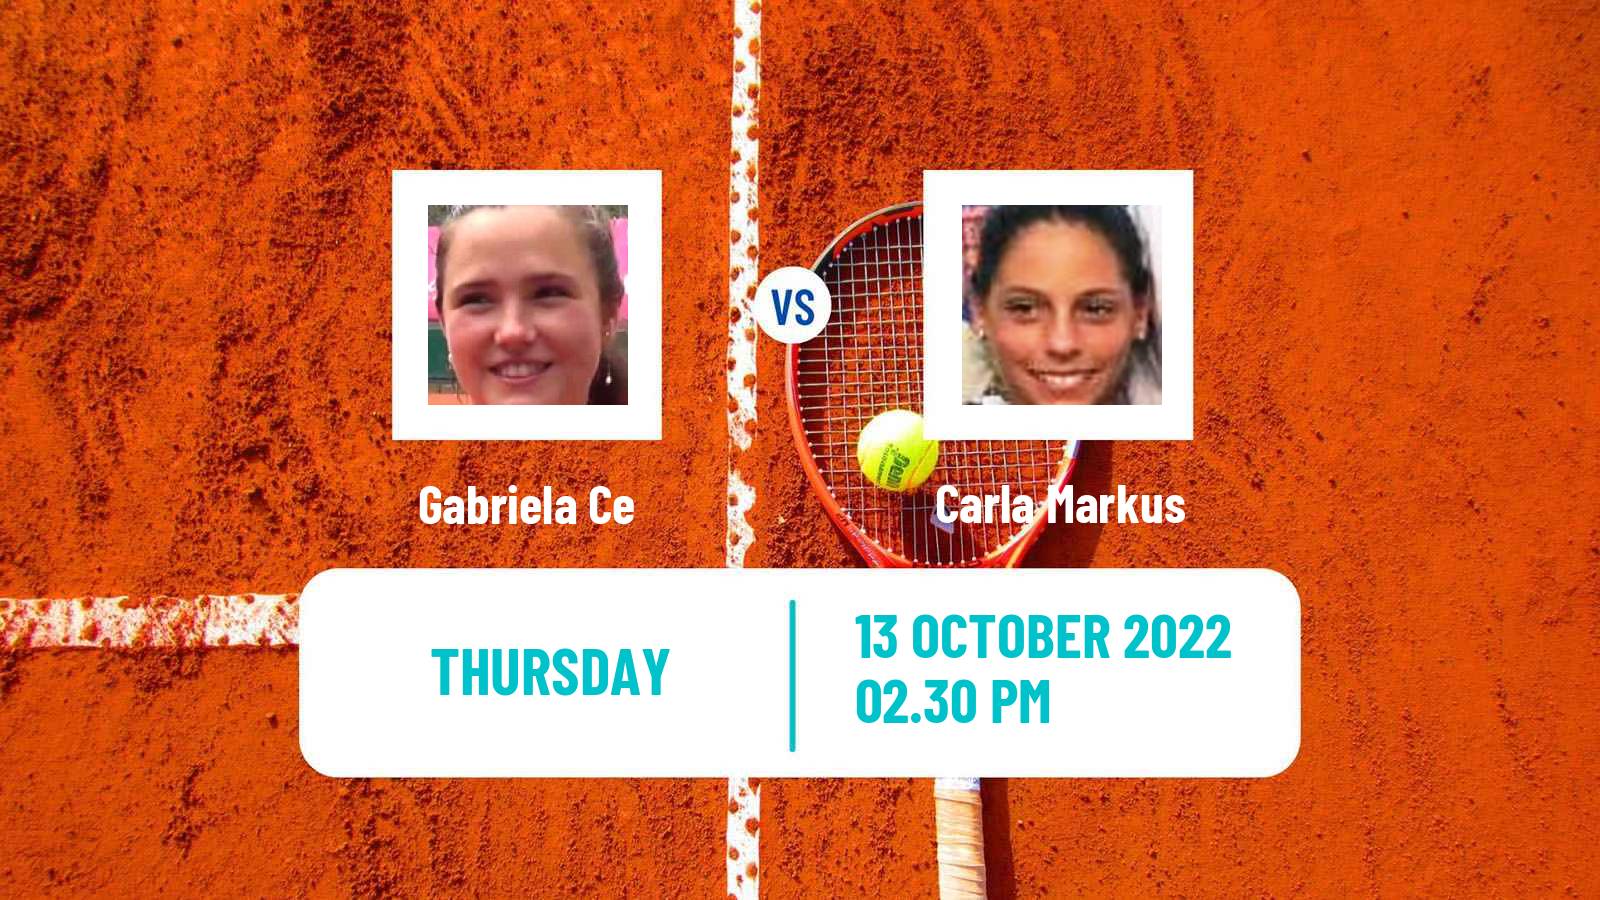 Tennis ITF Tournaments Gabriela Ce - Carla Markus